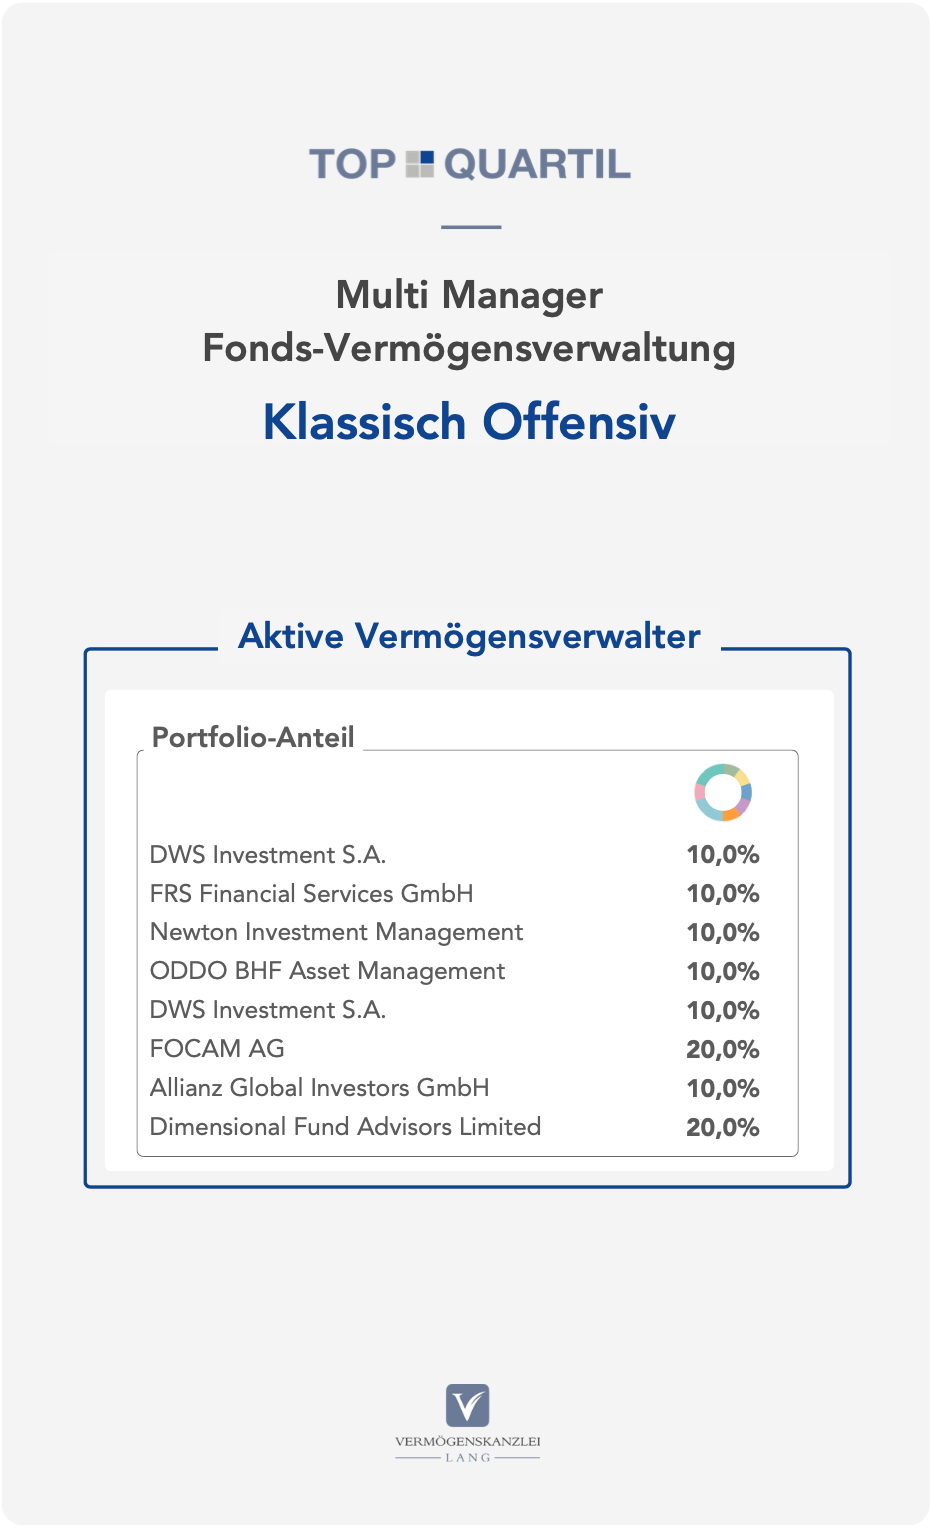 Fondsportfolio: TOP QUARTIL Multi Manager Fonds-Vermögensverwaltung [Klassisch Offensiv]